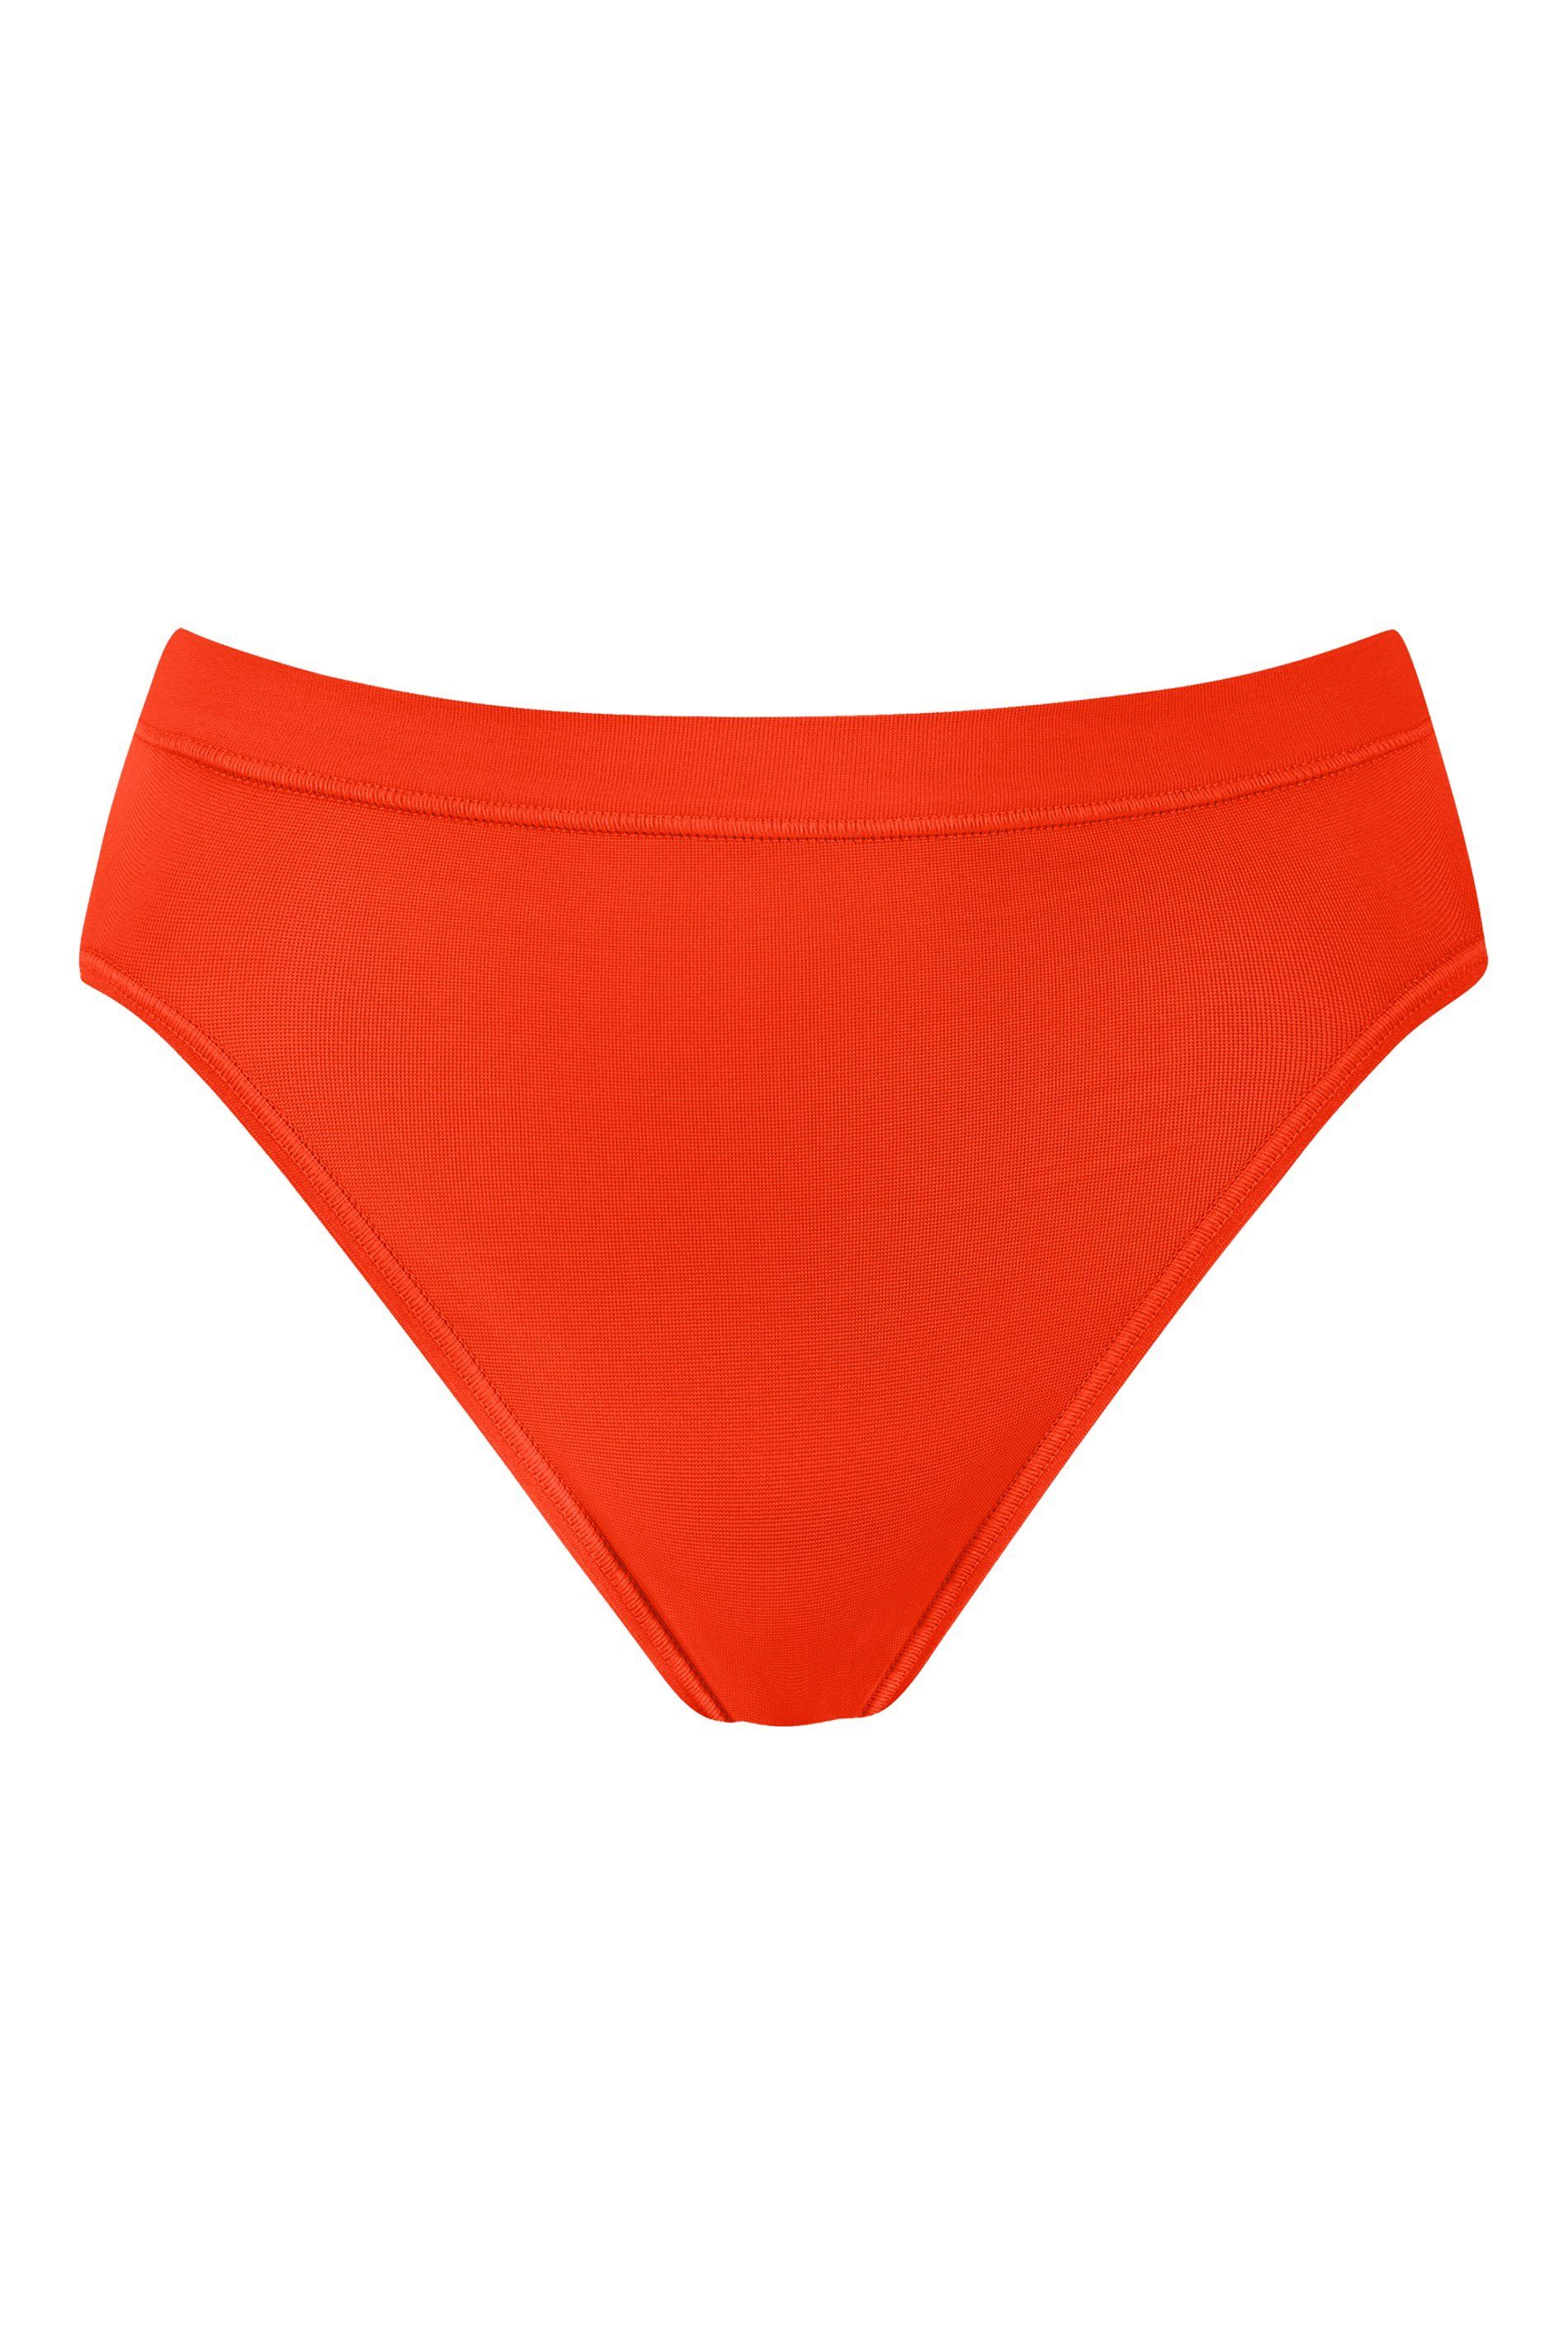 Mey Jazz-Pants Slips Mey Jazz-Pants orange Stück, 1-St., Orange Stück) Camelian Emotion 59201 carnelian (1 1